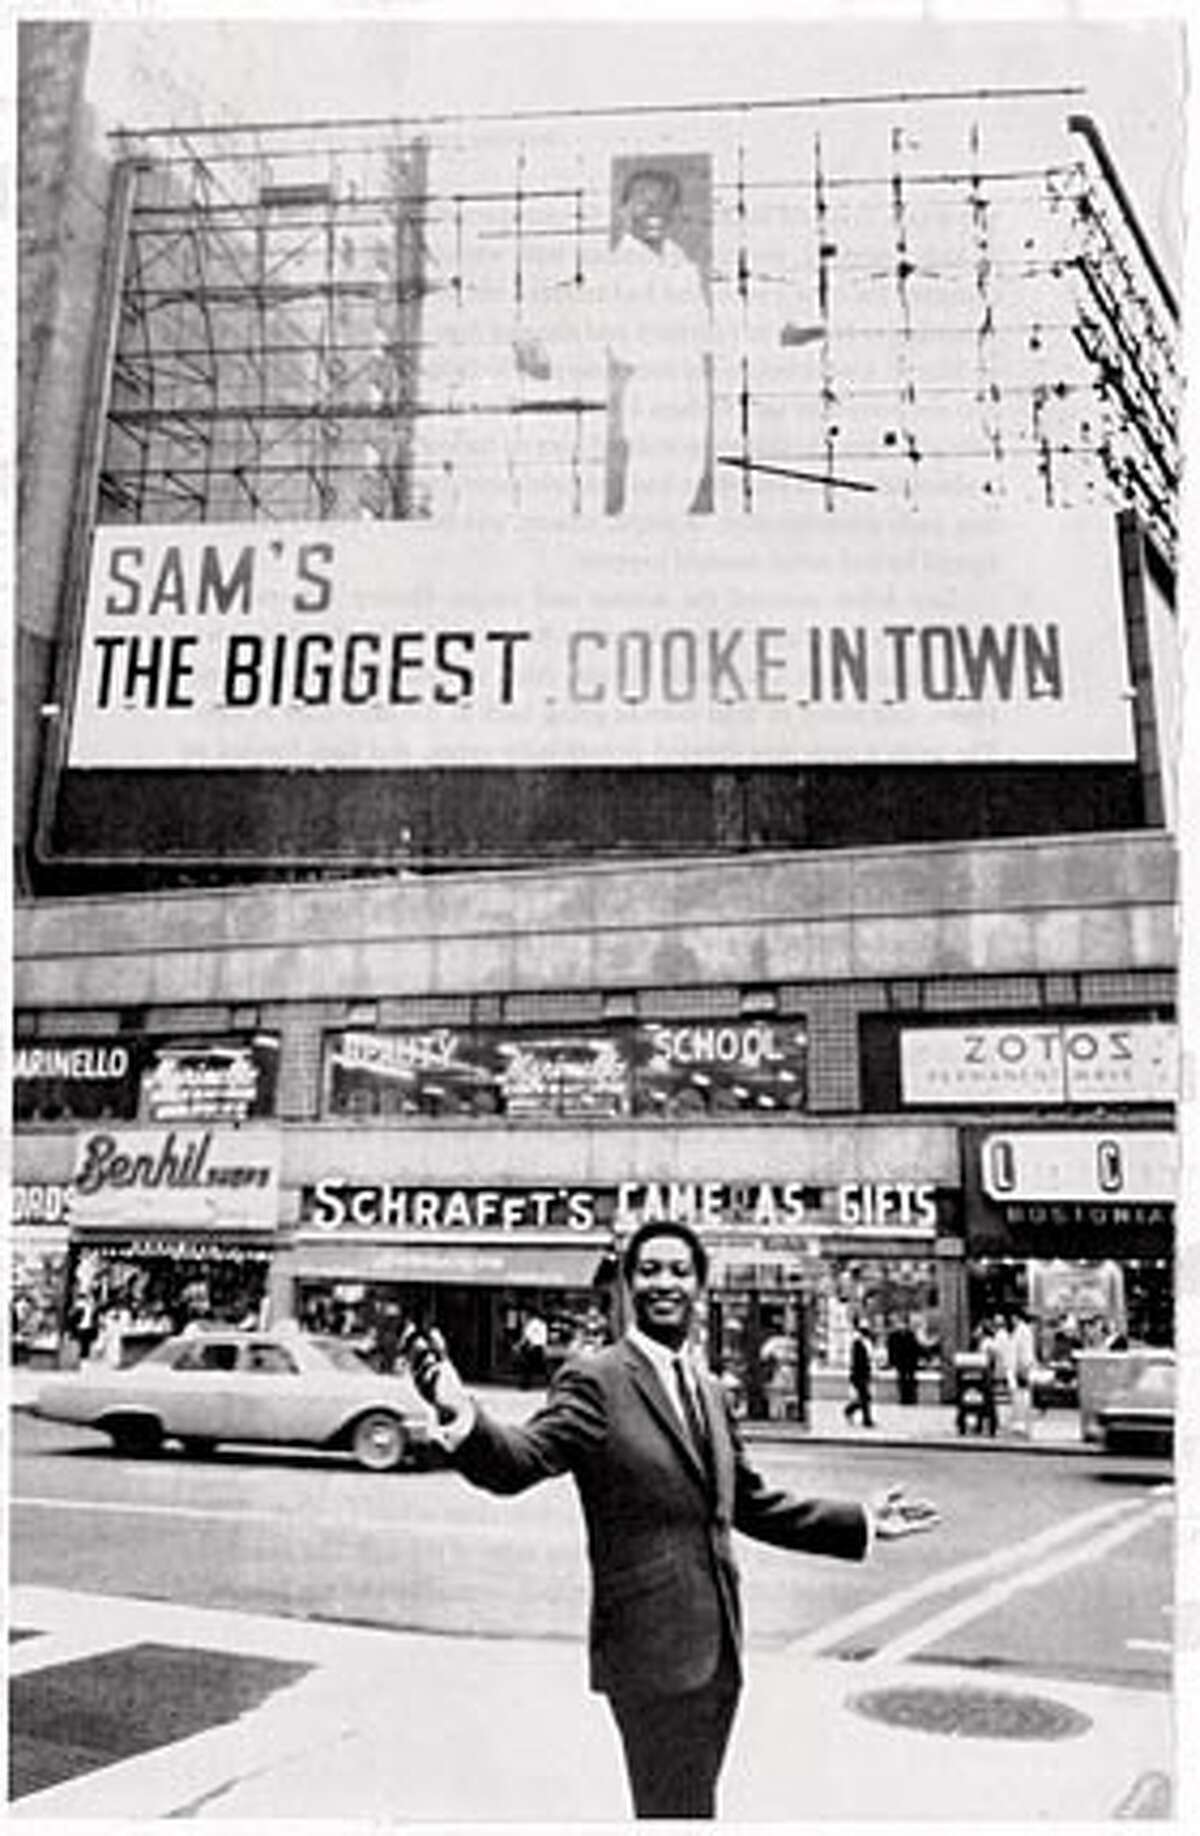 Greatest singer of his generation / Guralnick's biography depicts Sam